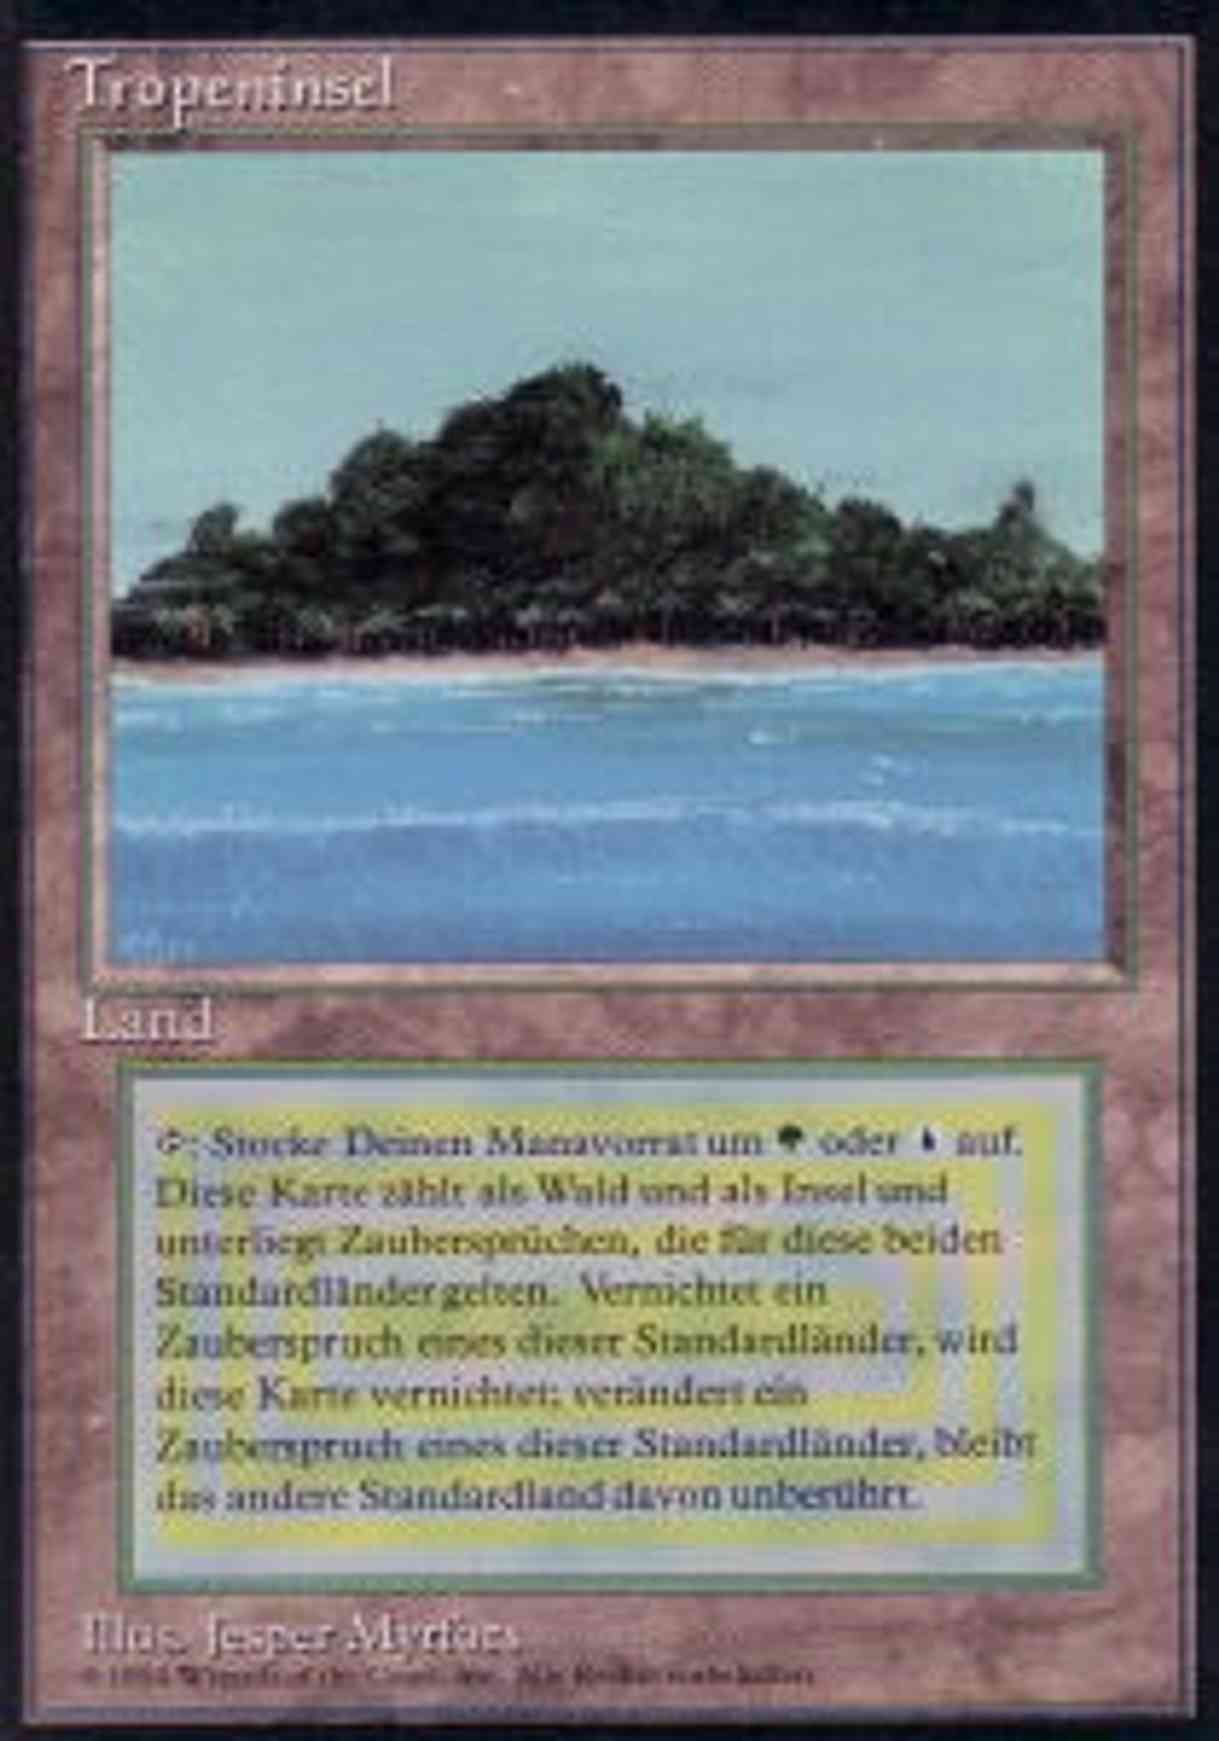 Tropical Island magic card front